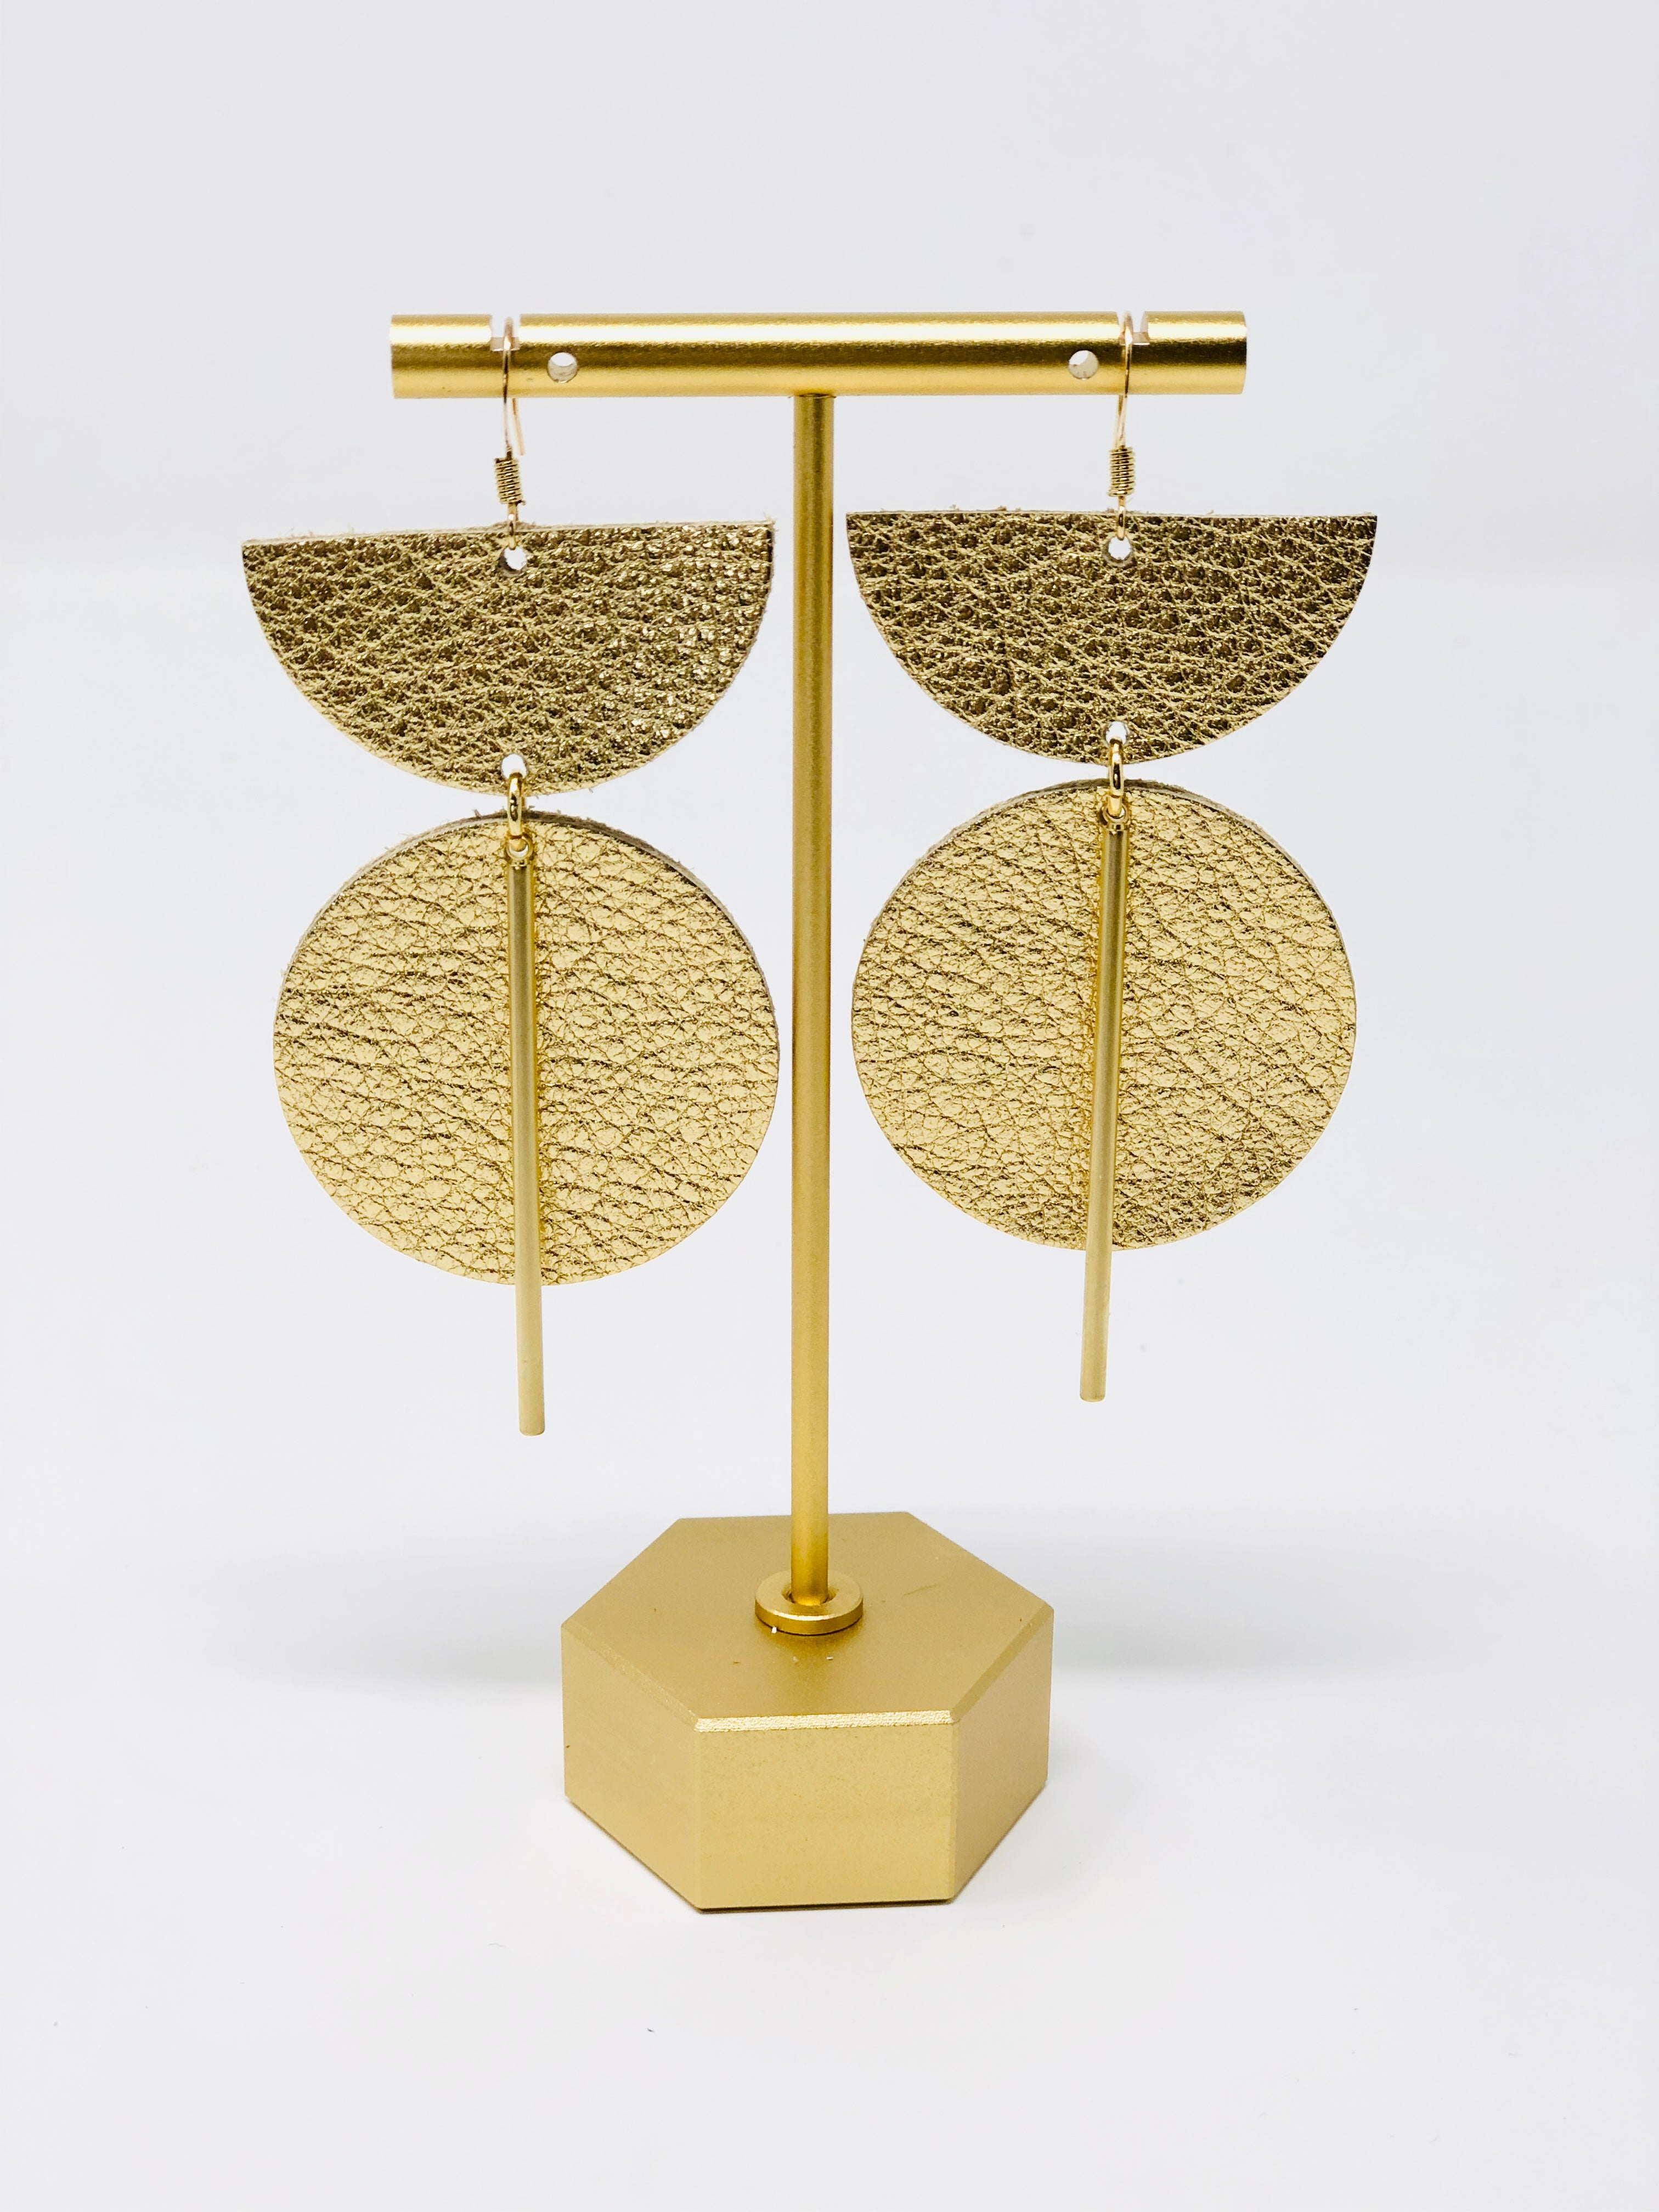 Gold Metallic Circulars with Gold Hardware - Small